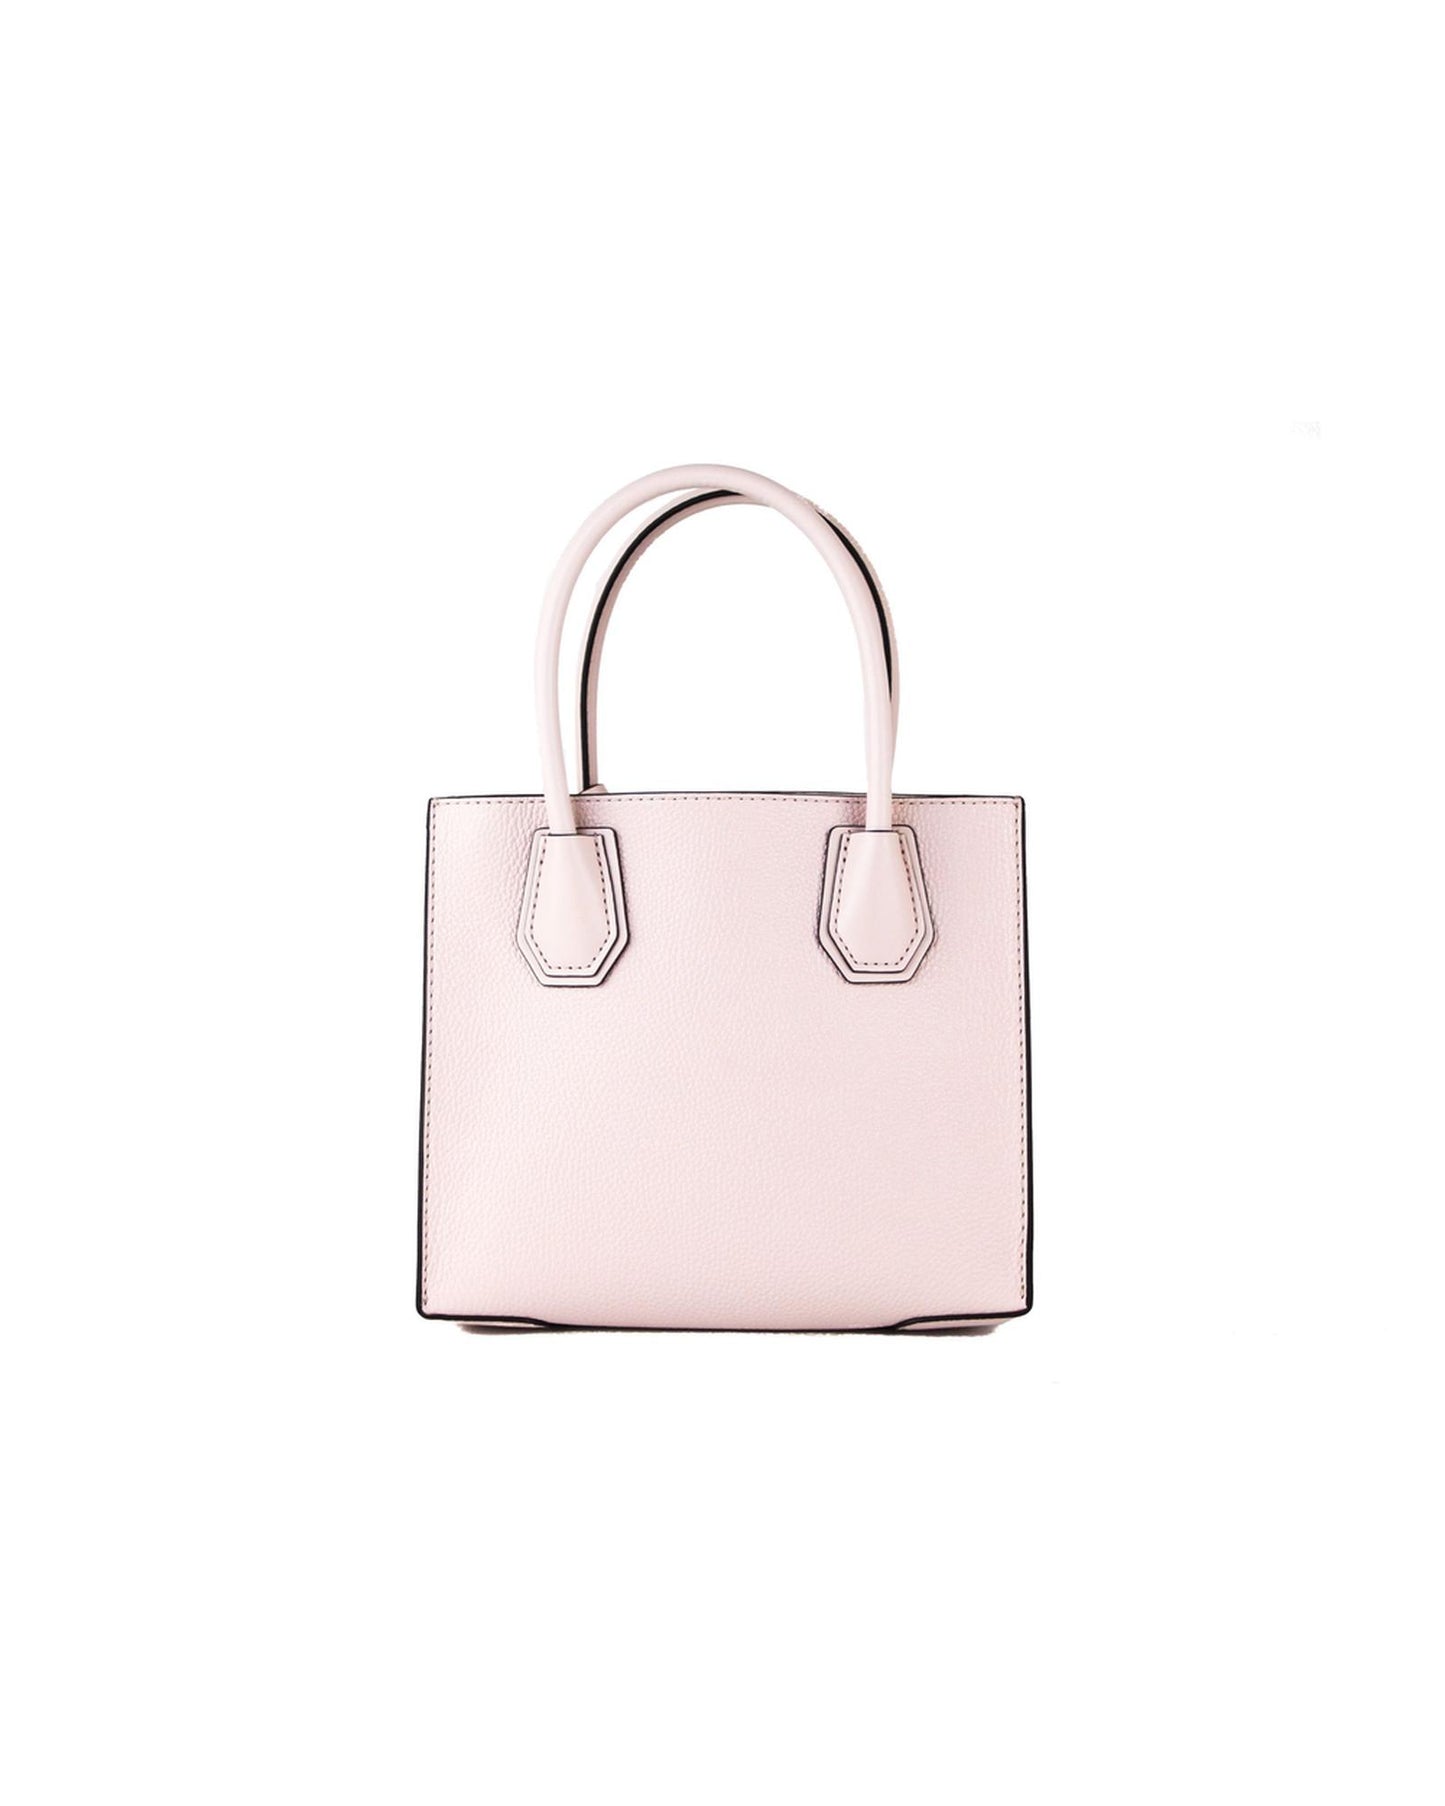 Michael Kors Mercer Medium Messenger Handbag - Powder Blush One Size Women